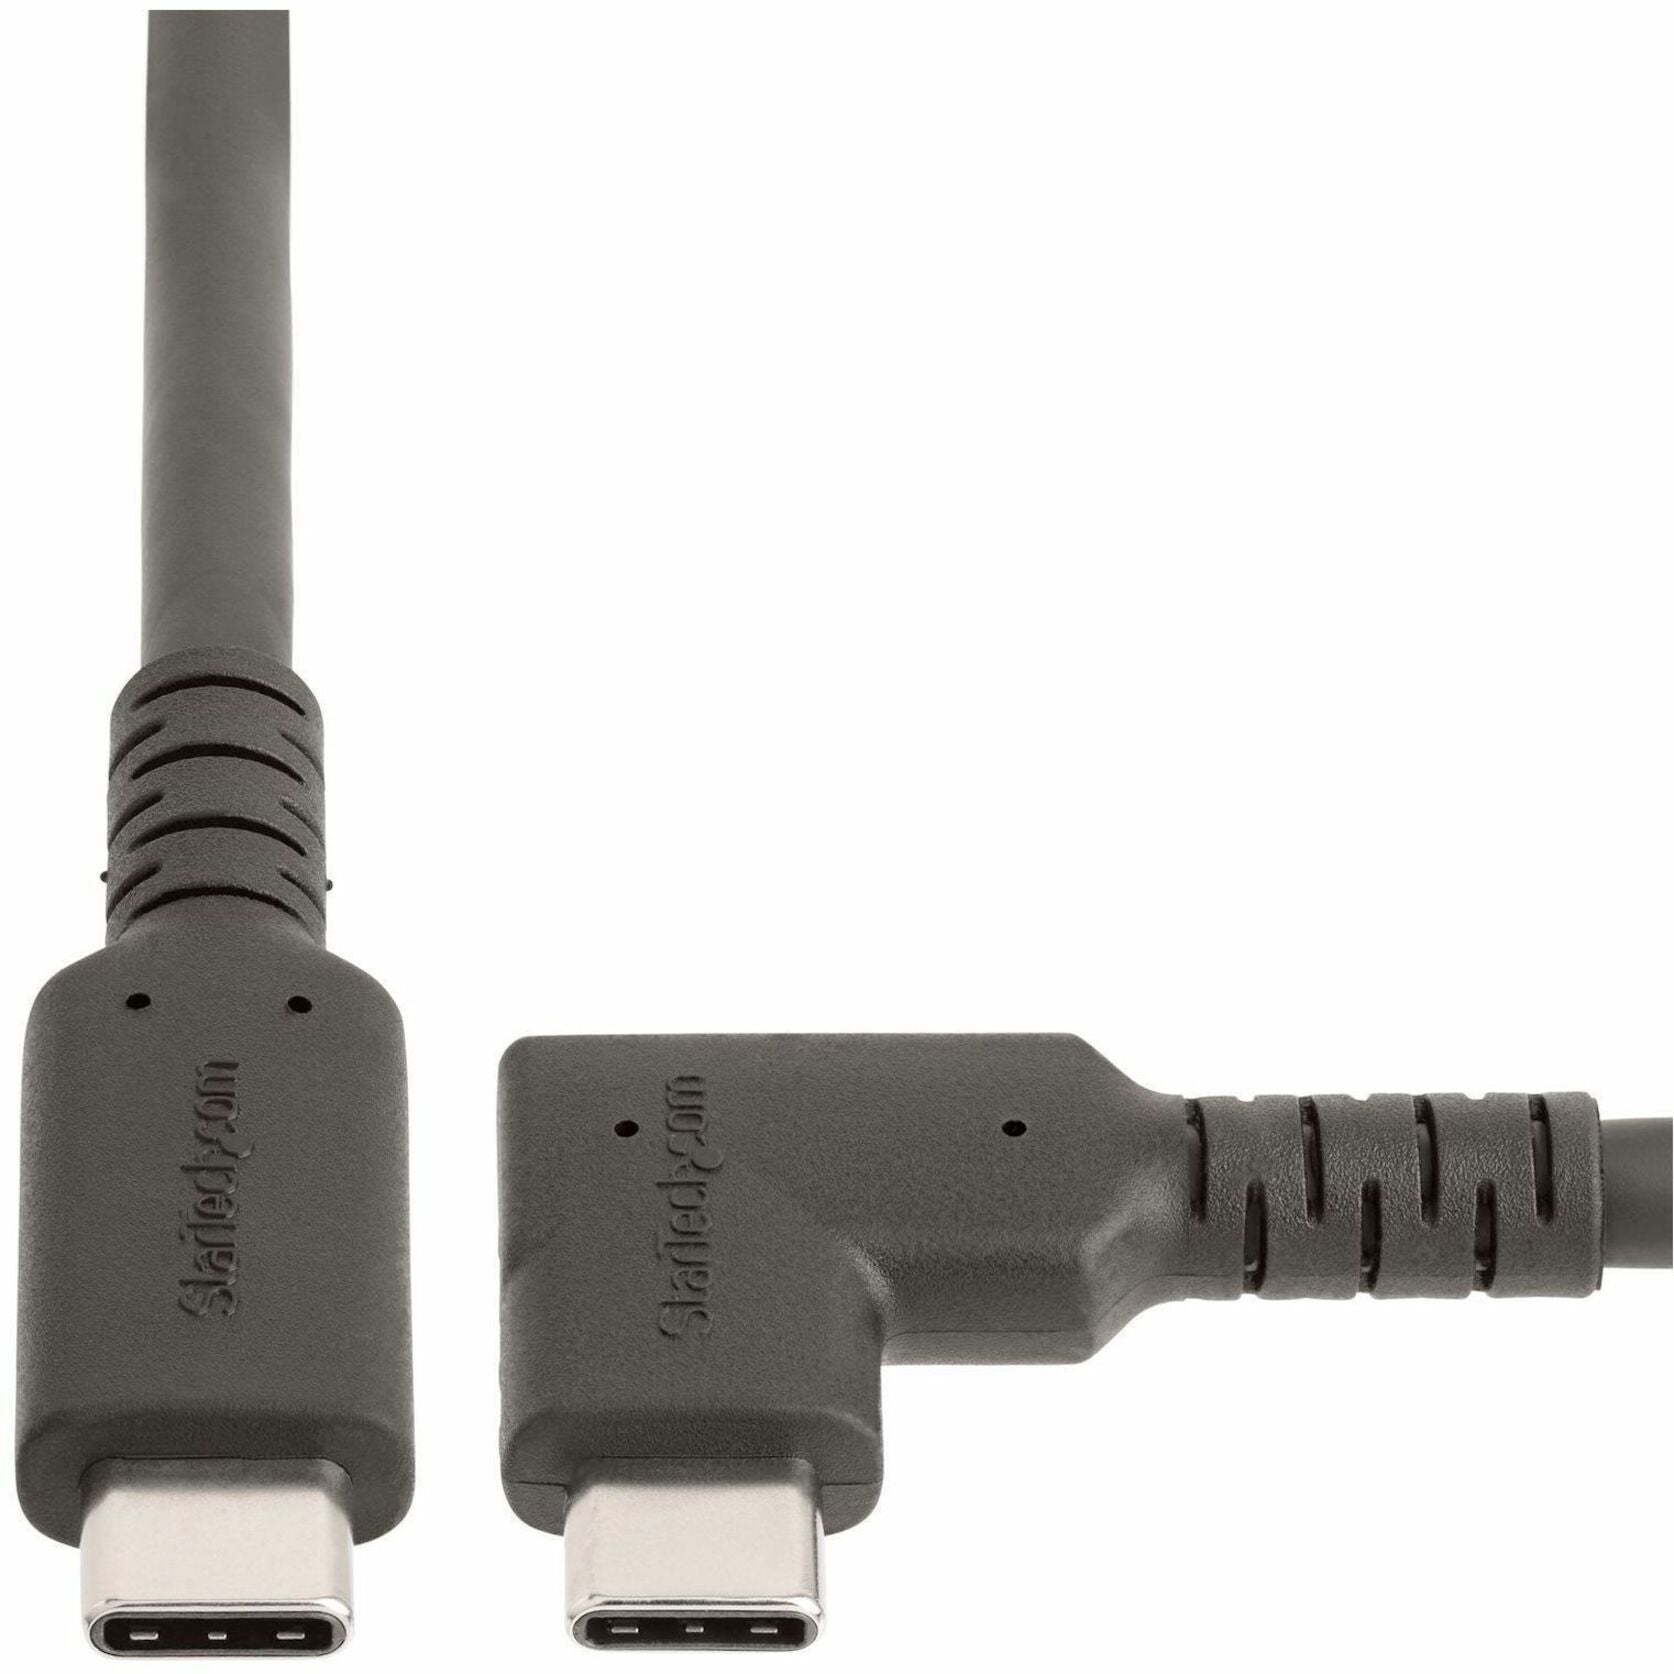 StarTech.com USB-C Data Transfer Cable - 6 ft (RUSB315CC2MBR)